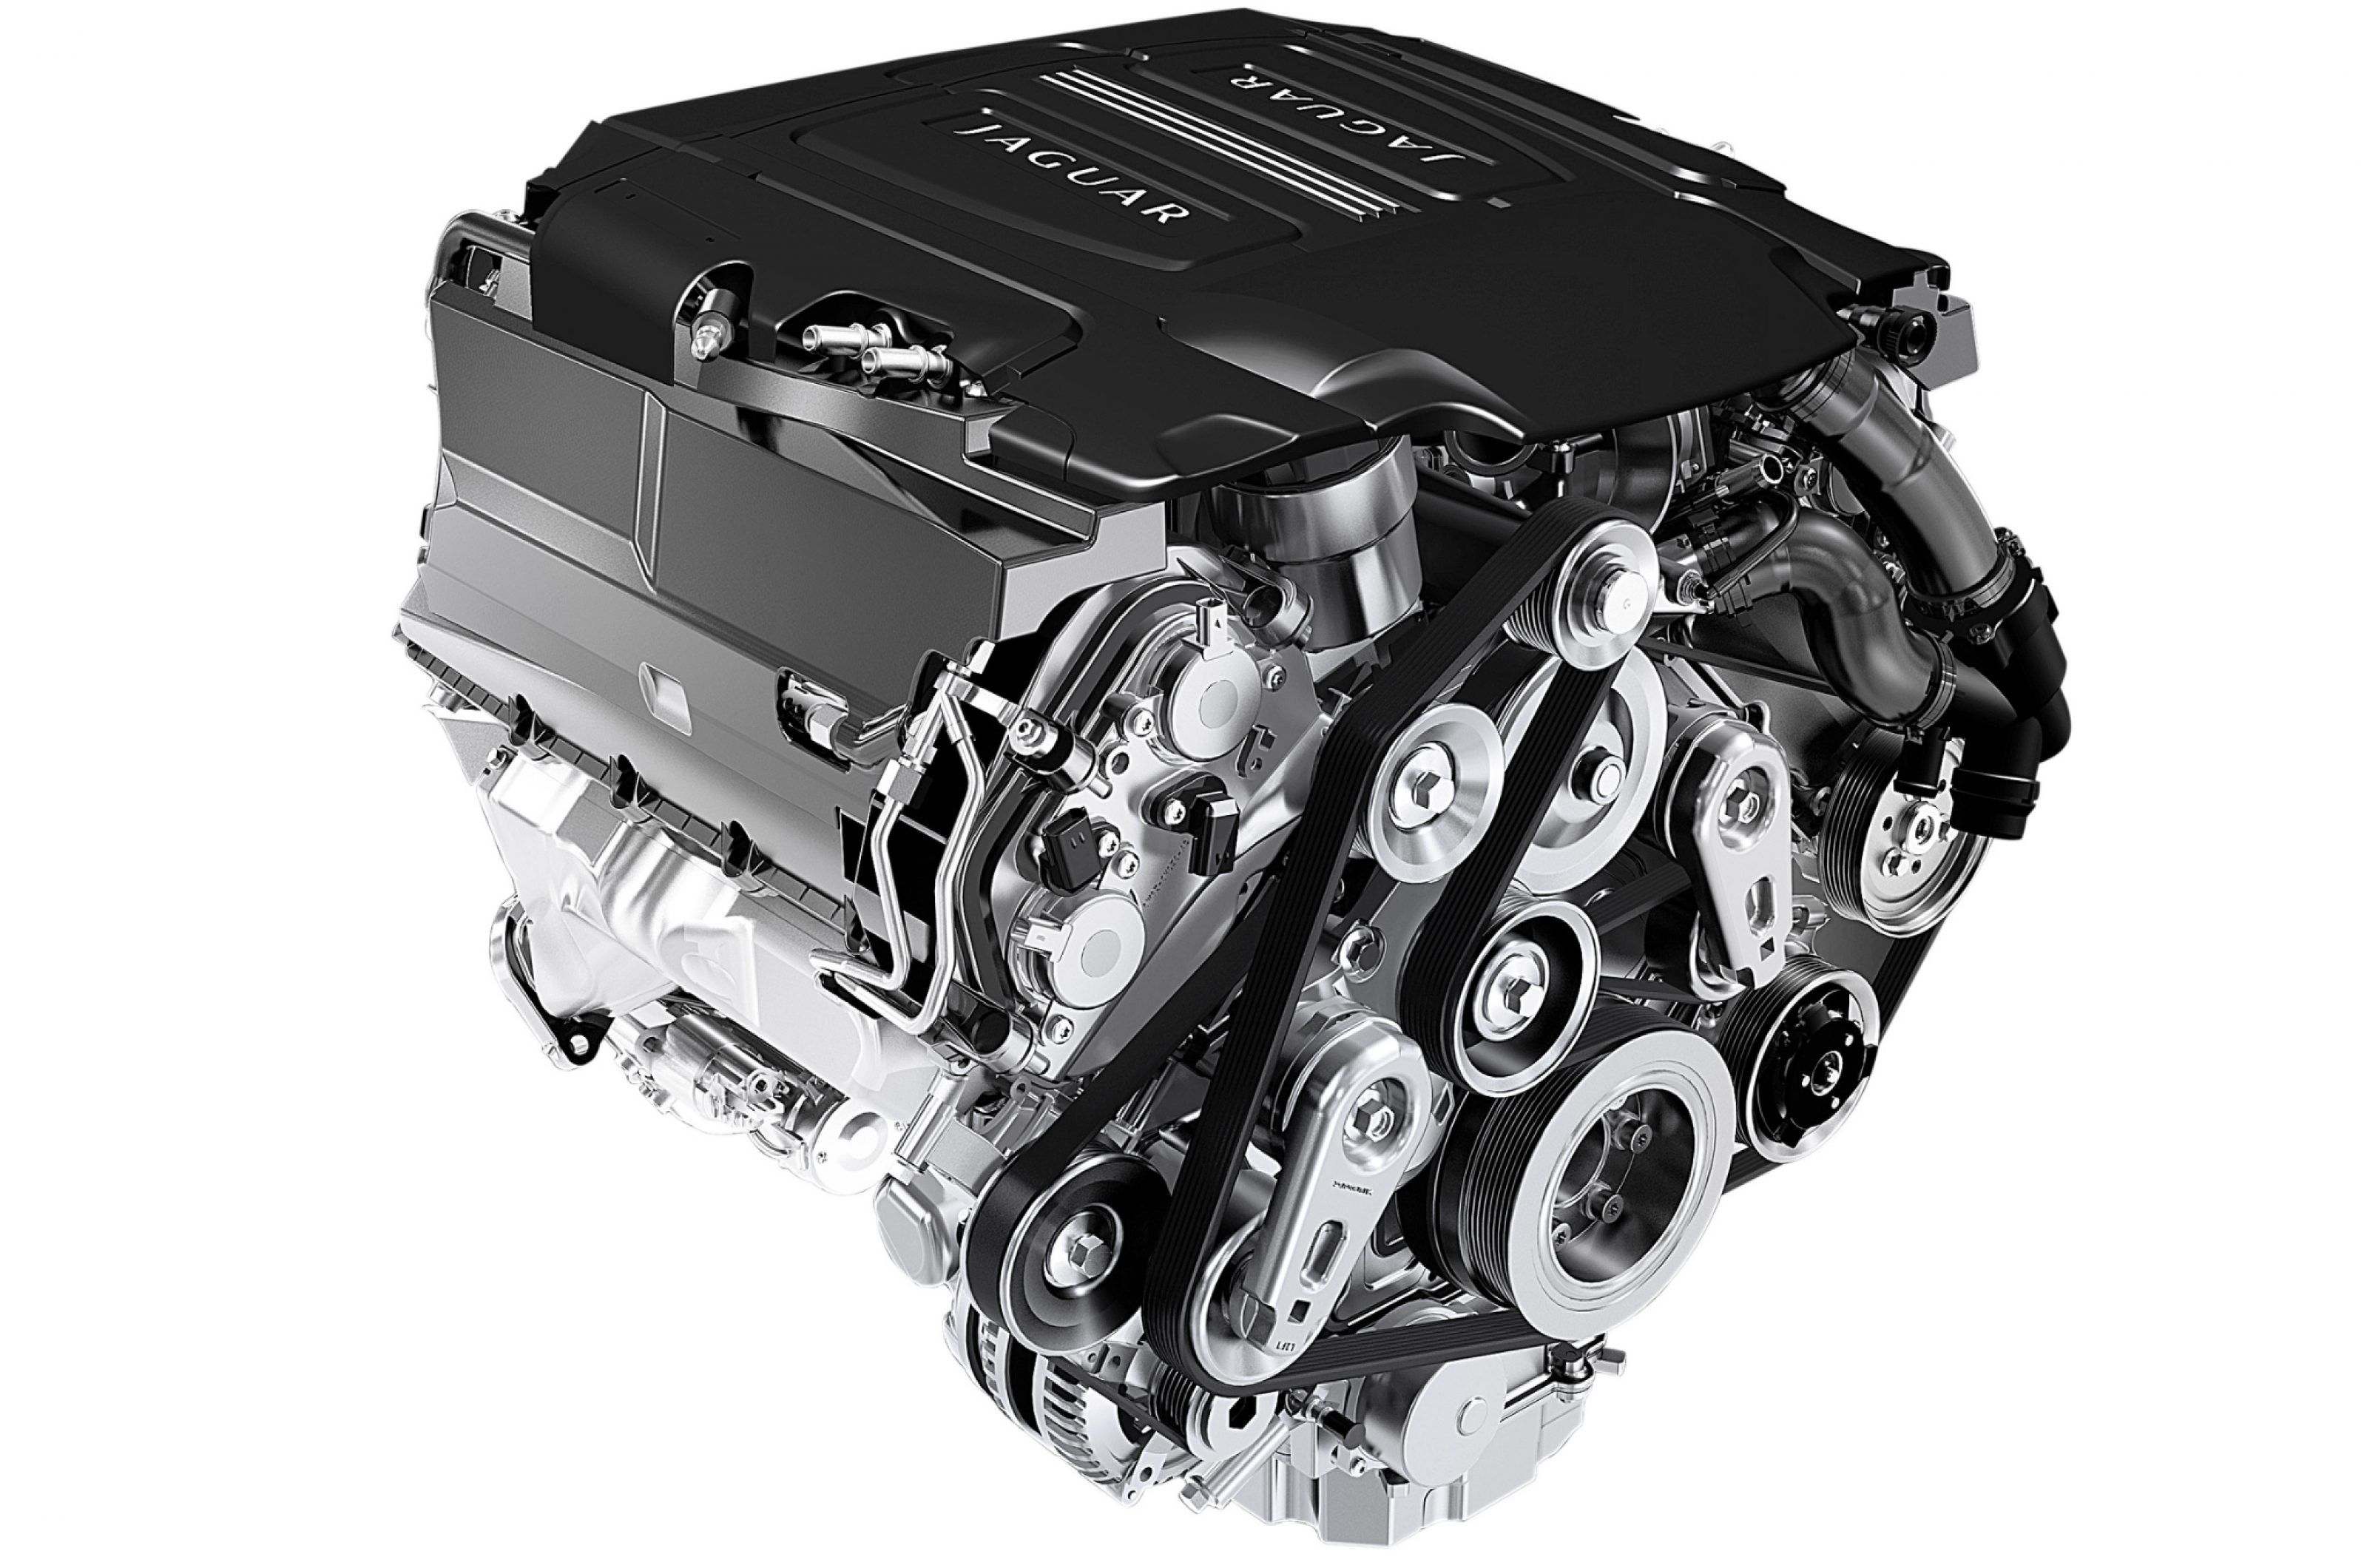 Range Rover 5.0 Supercharged. Рендж Ровер мотор v8. Ленд Ровер спорт мотор v8. Двигатель Рендж Ровер 5.0 суперчарджер.